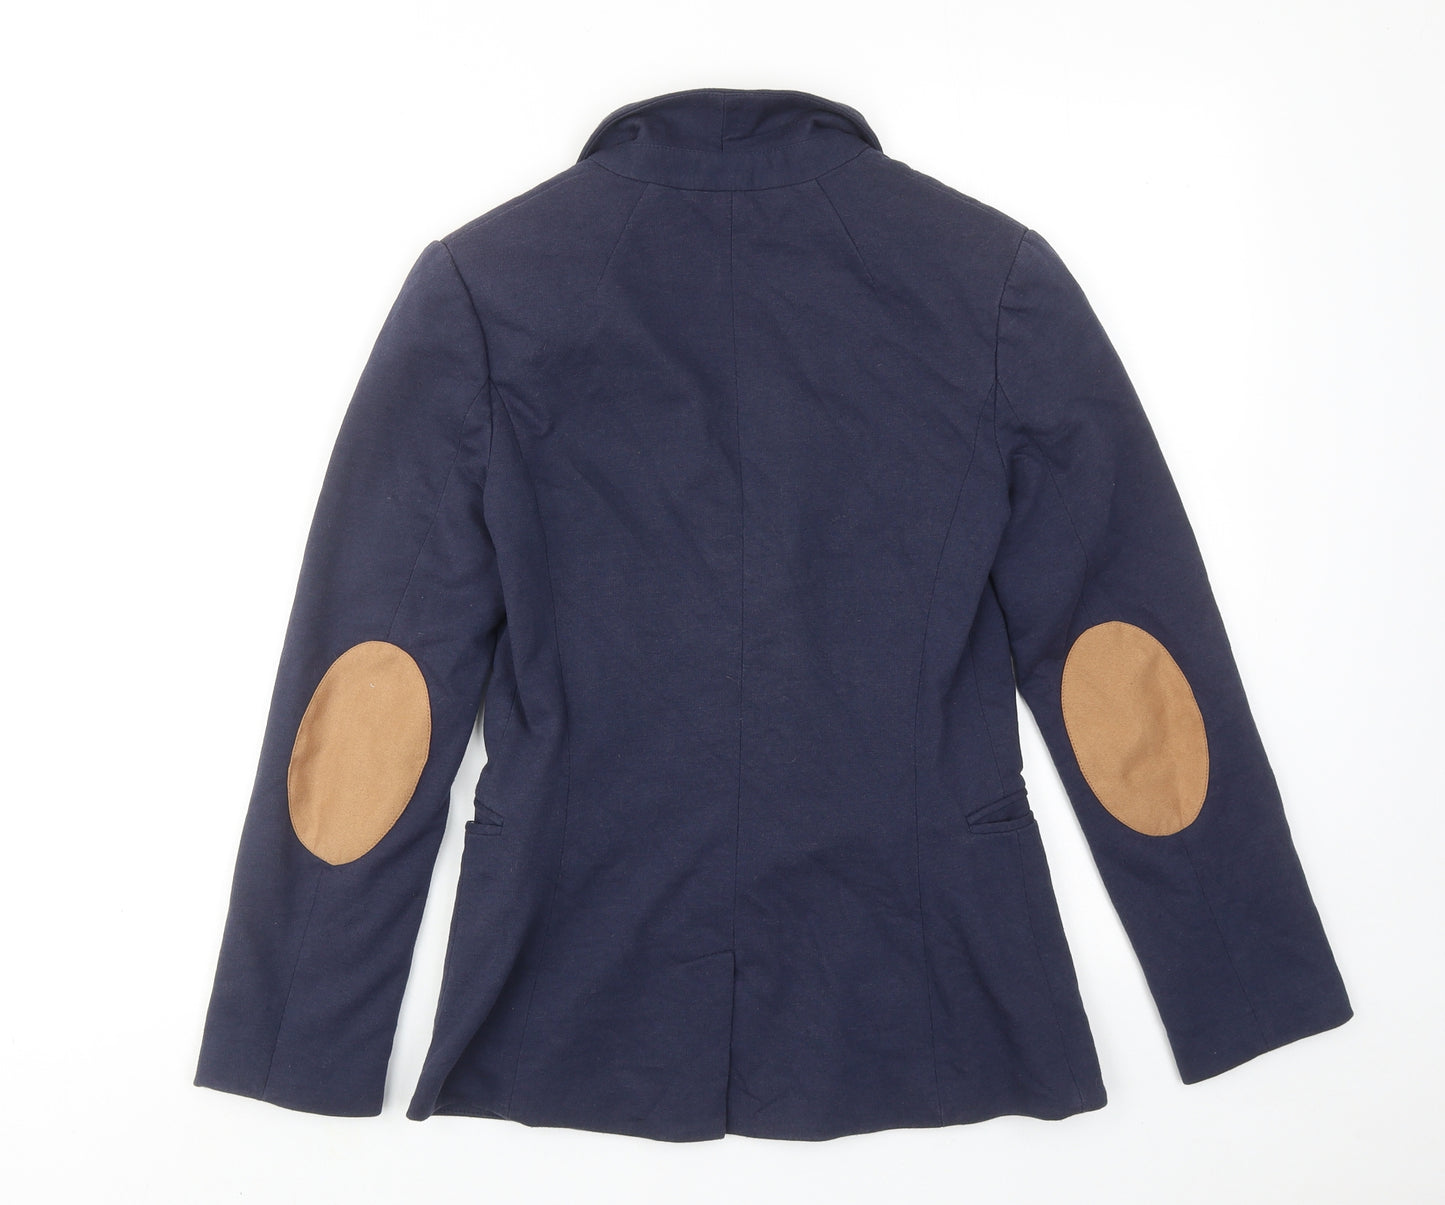 H&M Womens Blue Jacket Blazer Size 8 Button - Elbow Patches